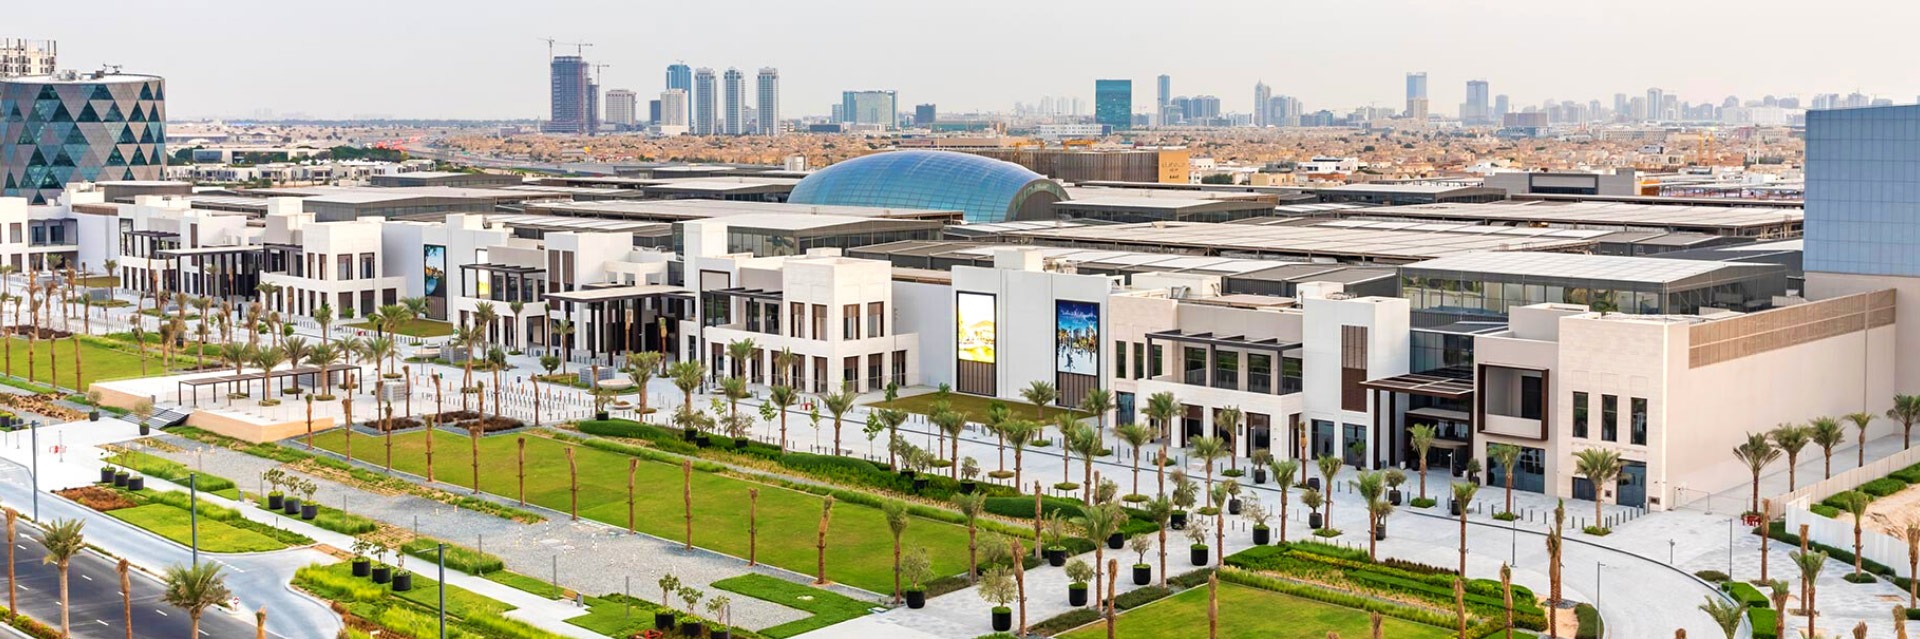 Dubai Hills Mall - List of venues and places in Dubai